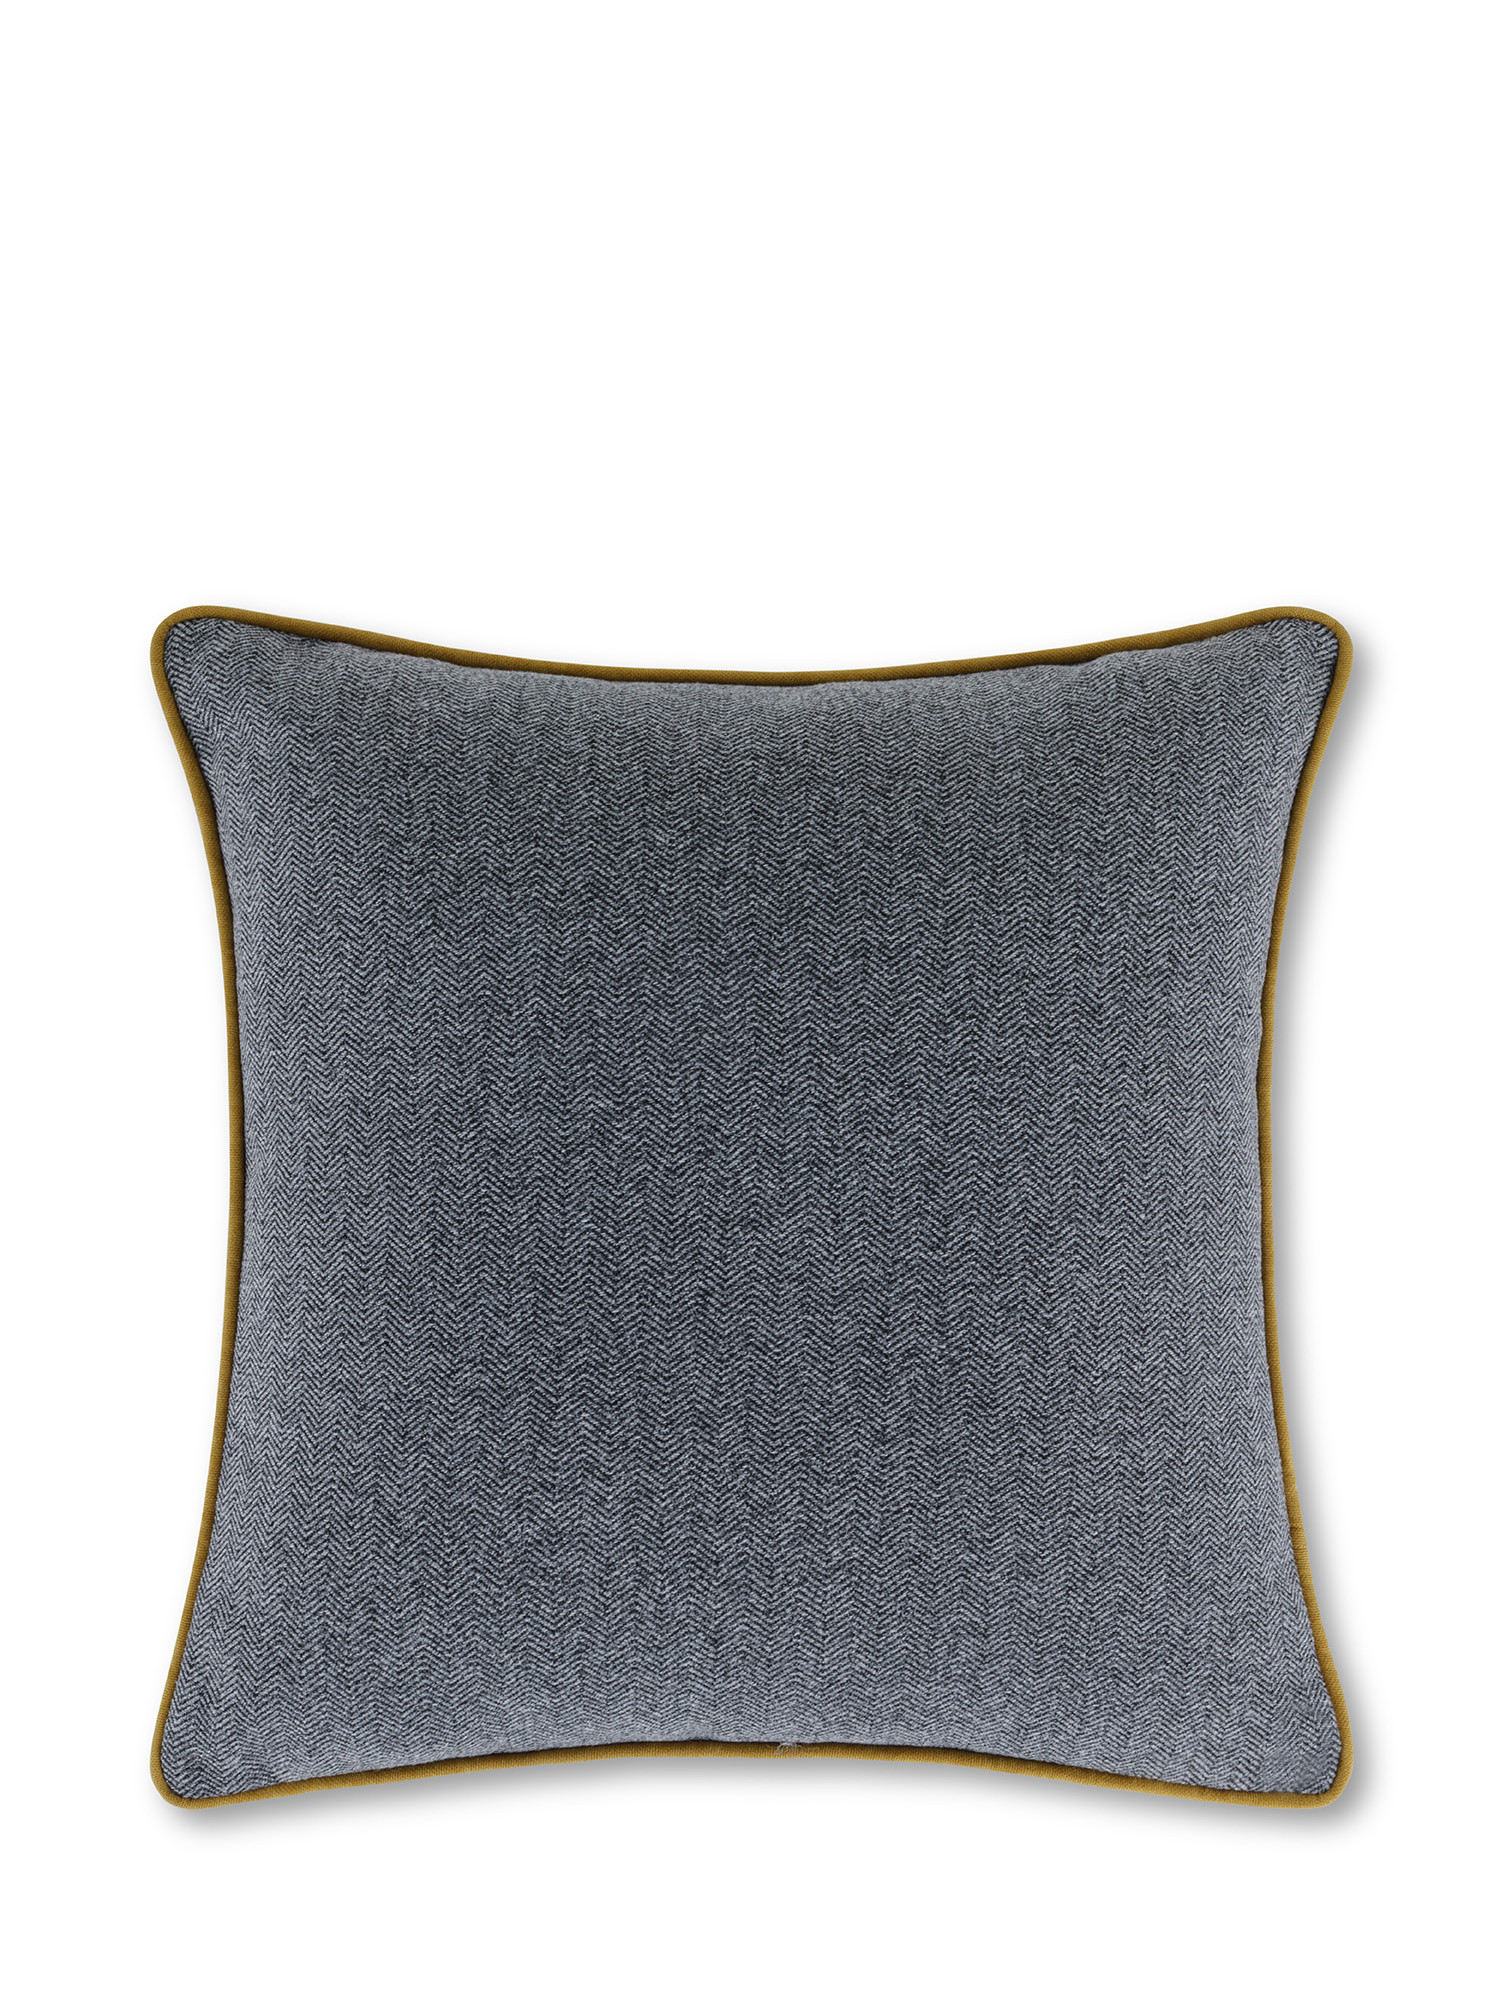 Cushion in herringbone tweed effect fabric 45x45 cm, Grey, large image number 0